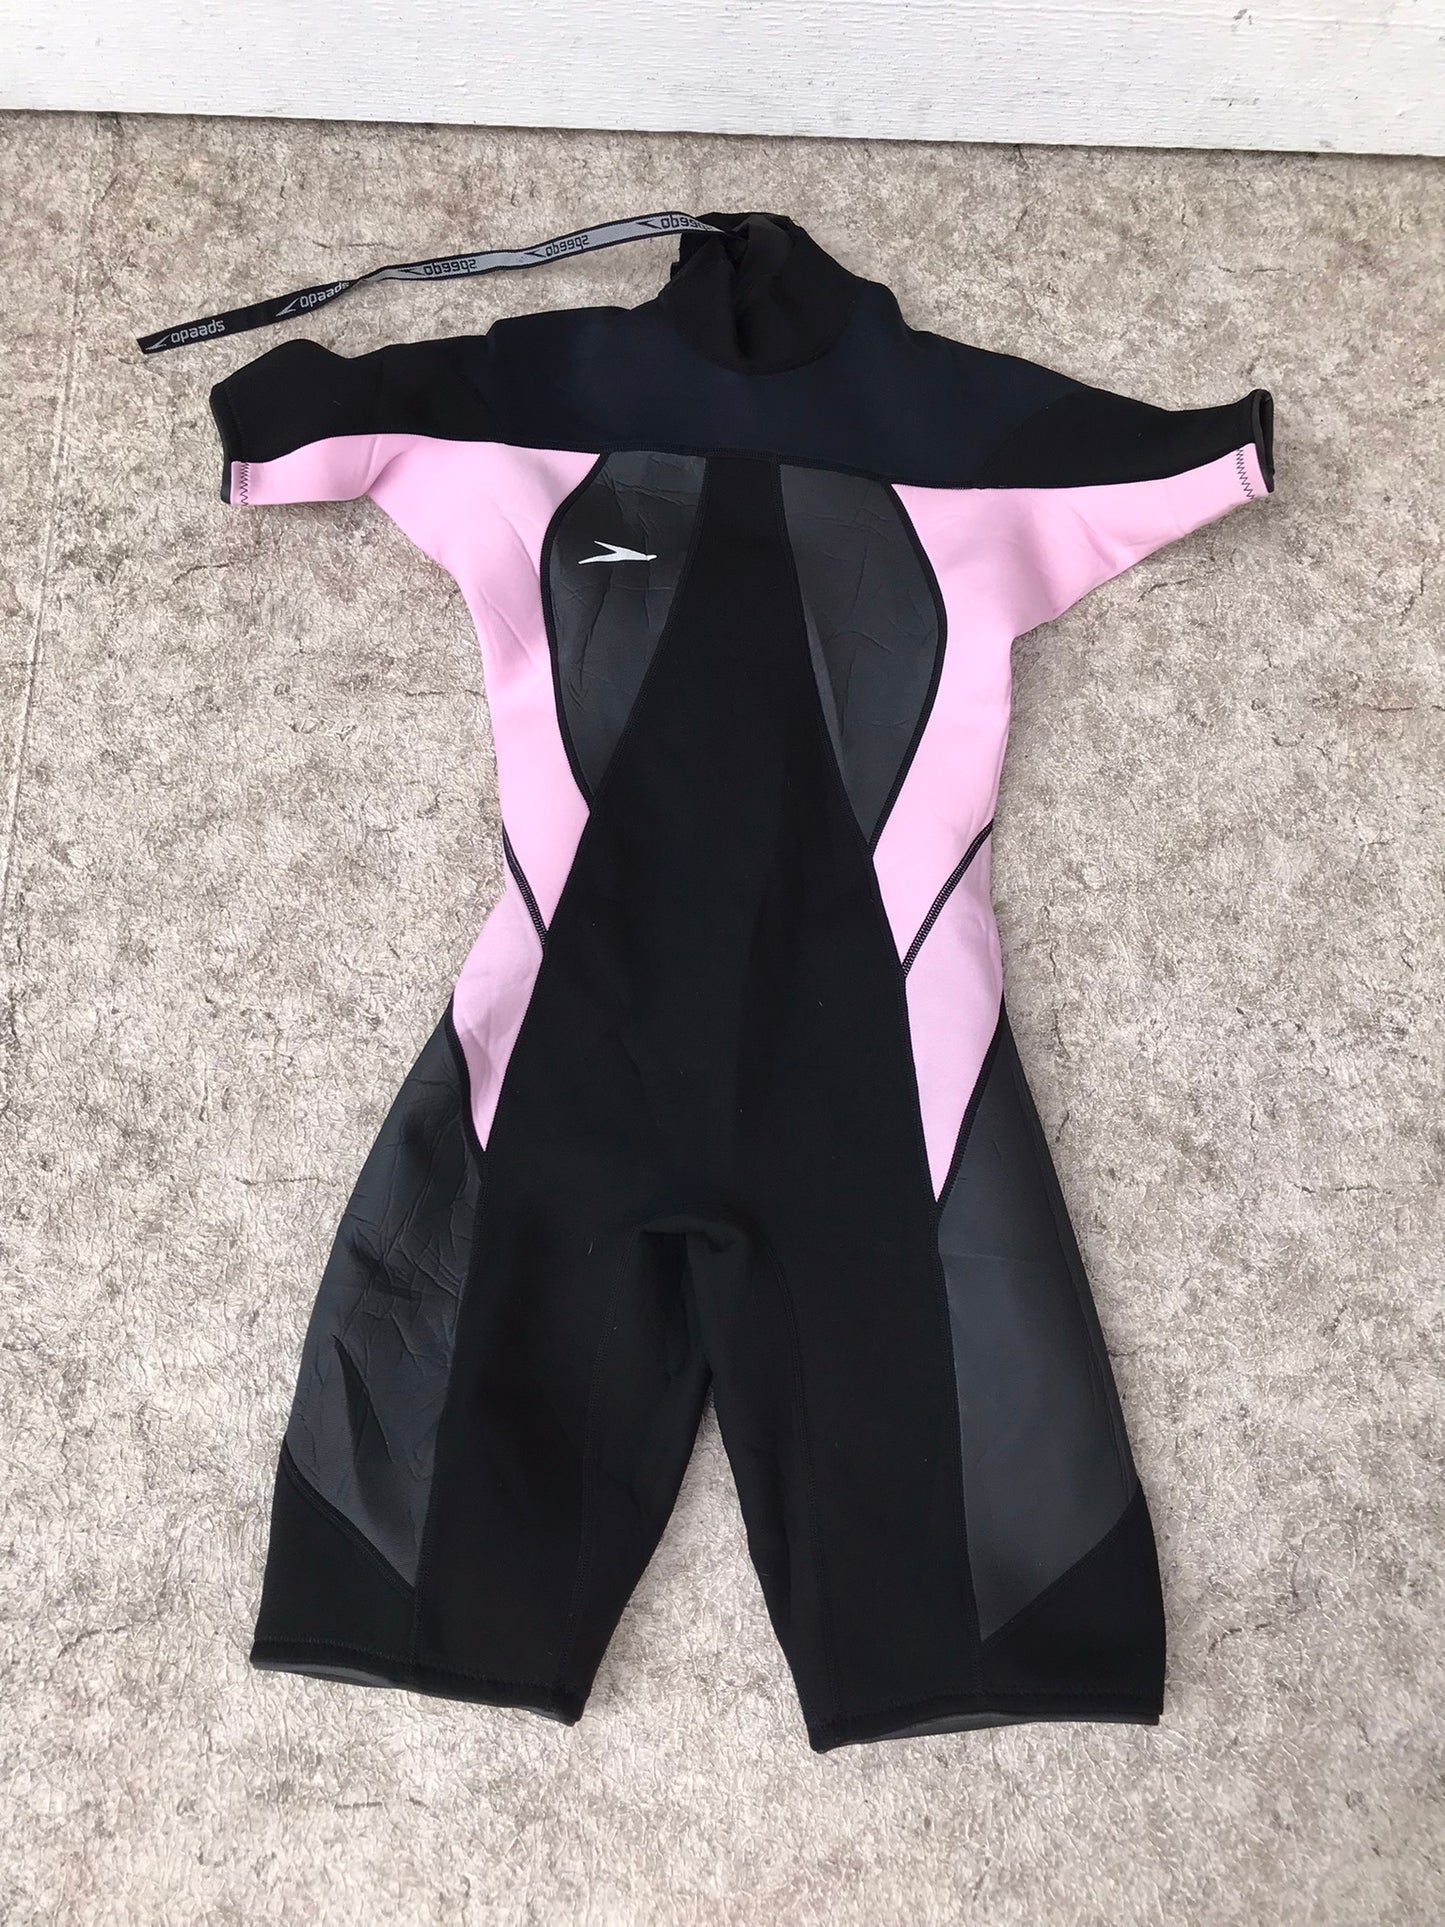 Wetsuit Ladies Size 7-8 Speedo Pink Black 2-3mm Neoprene Like New